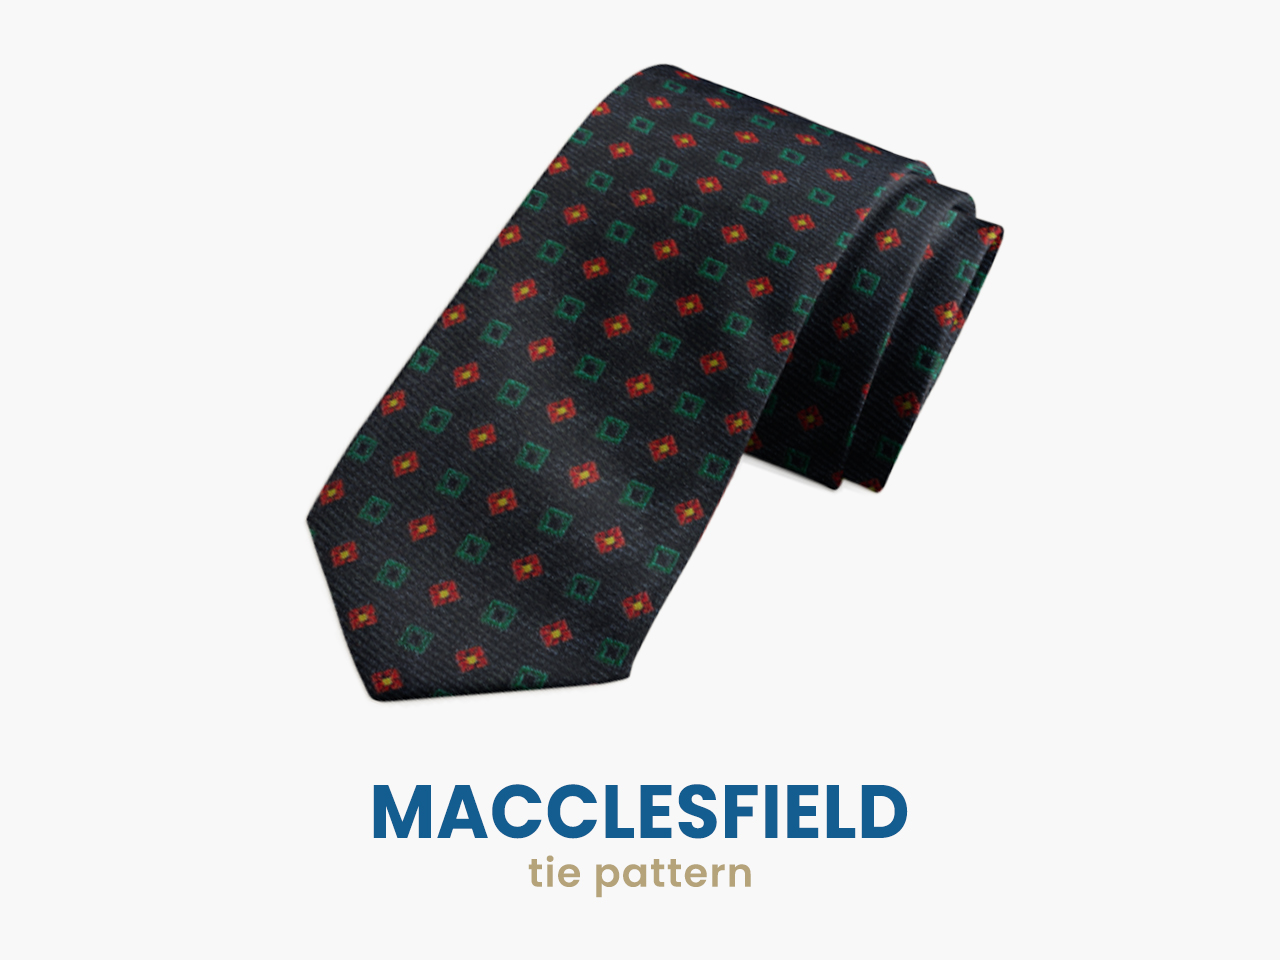 Macclesfield tie pattenr